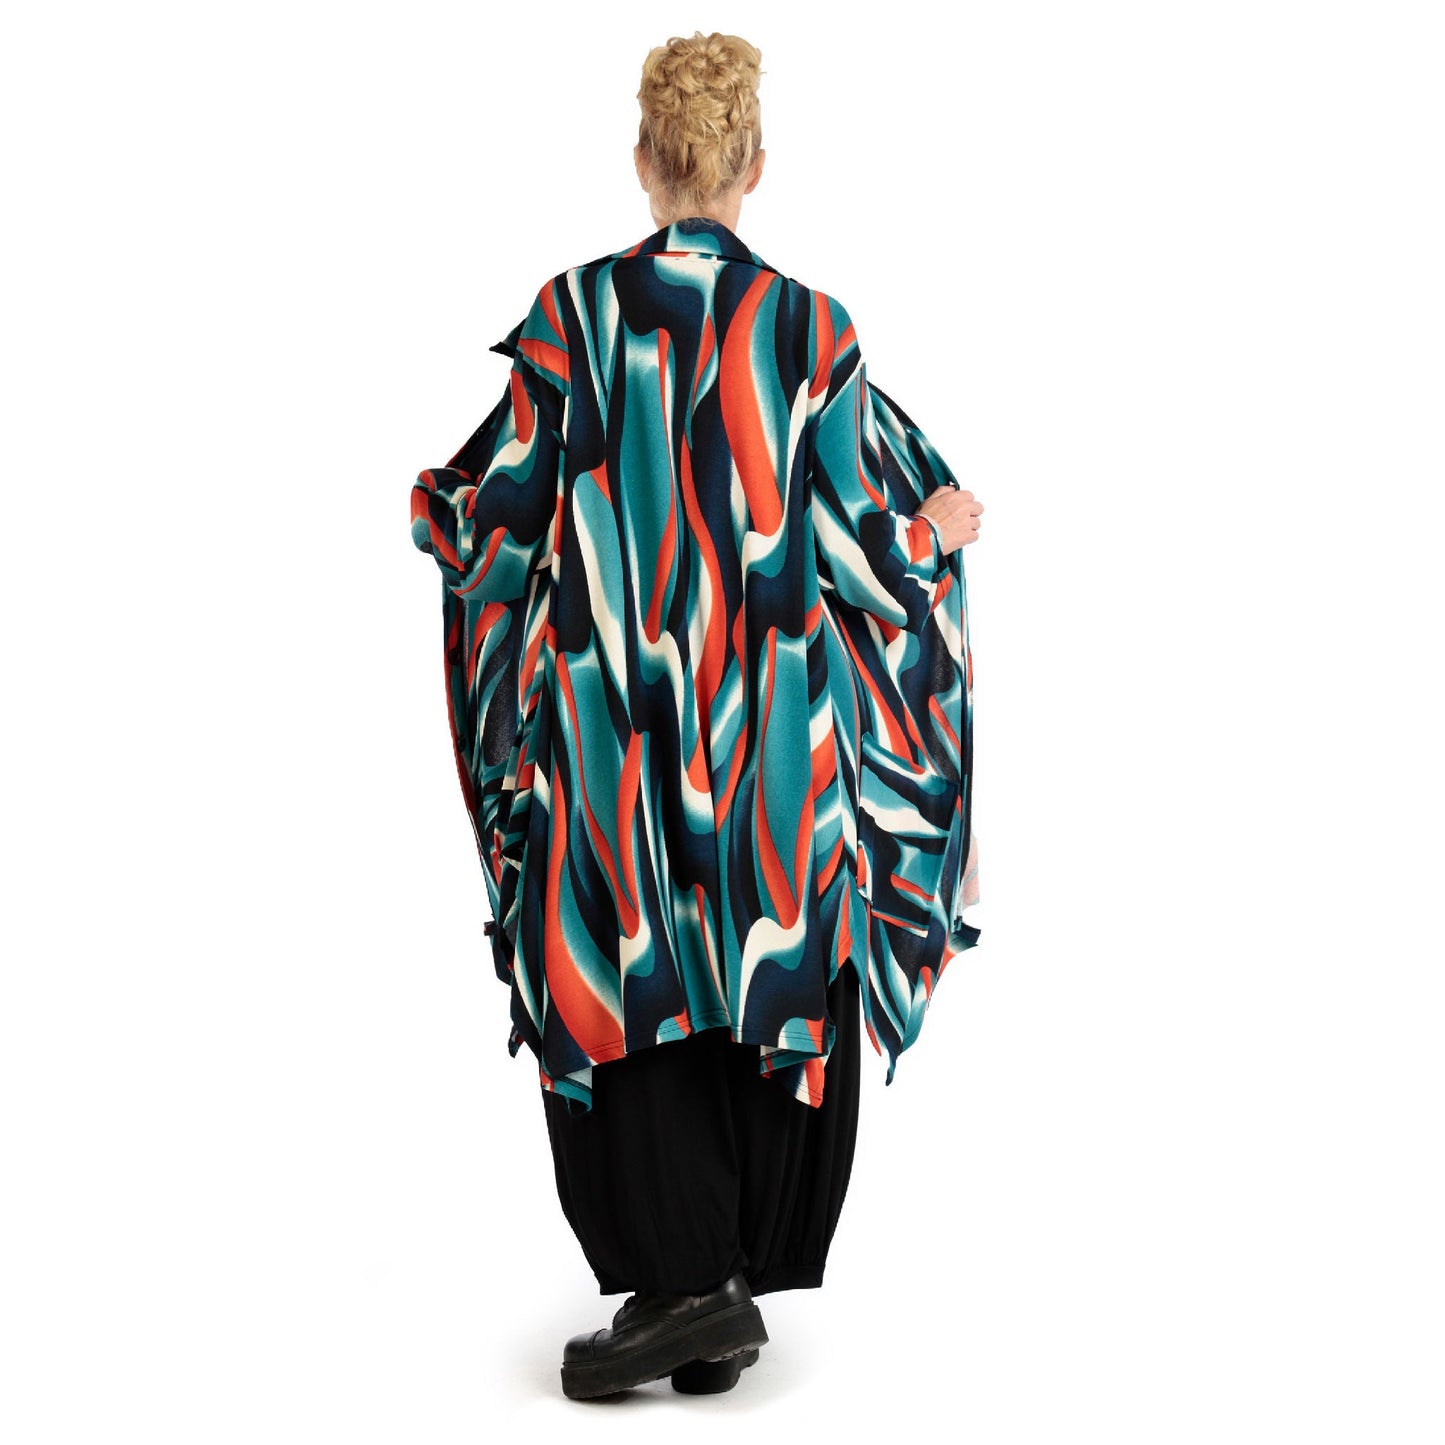 Winter jacket in A-shape made of soft fine knit quality, Aurora in blue-orange-black